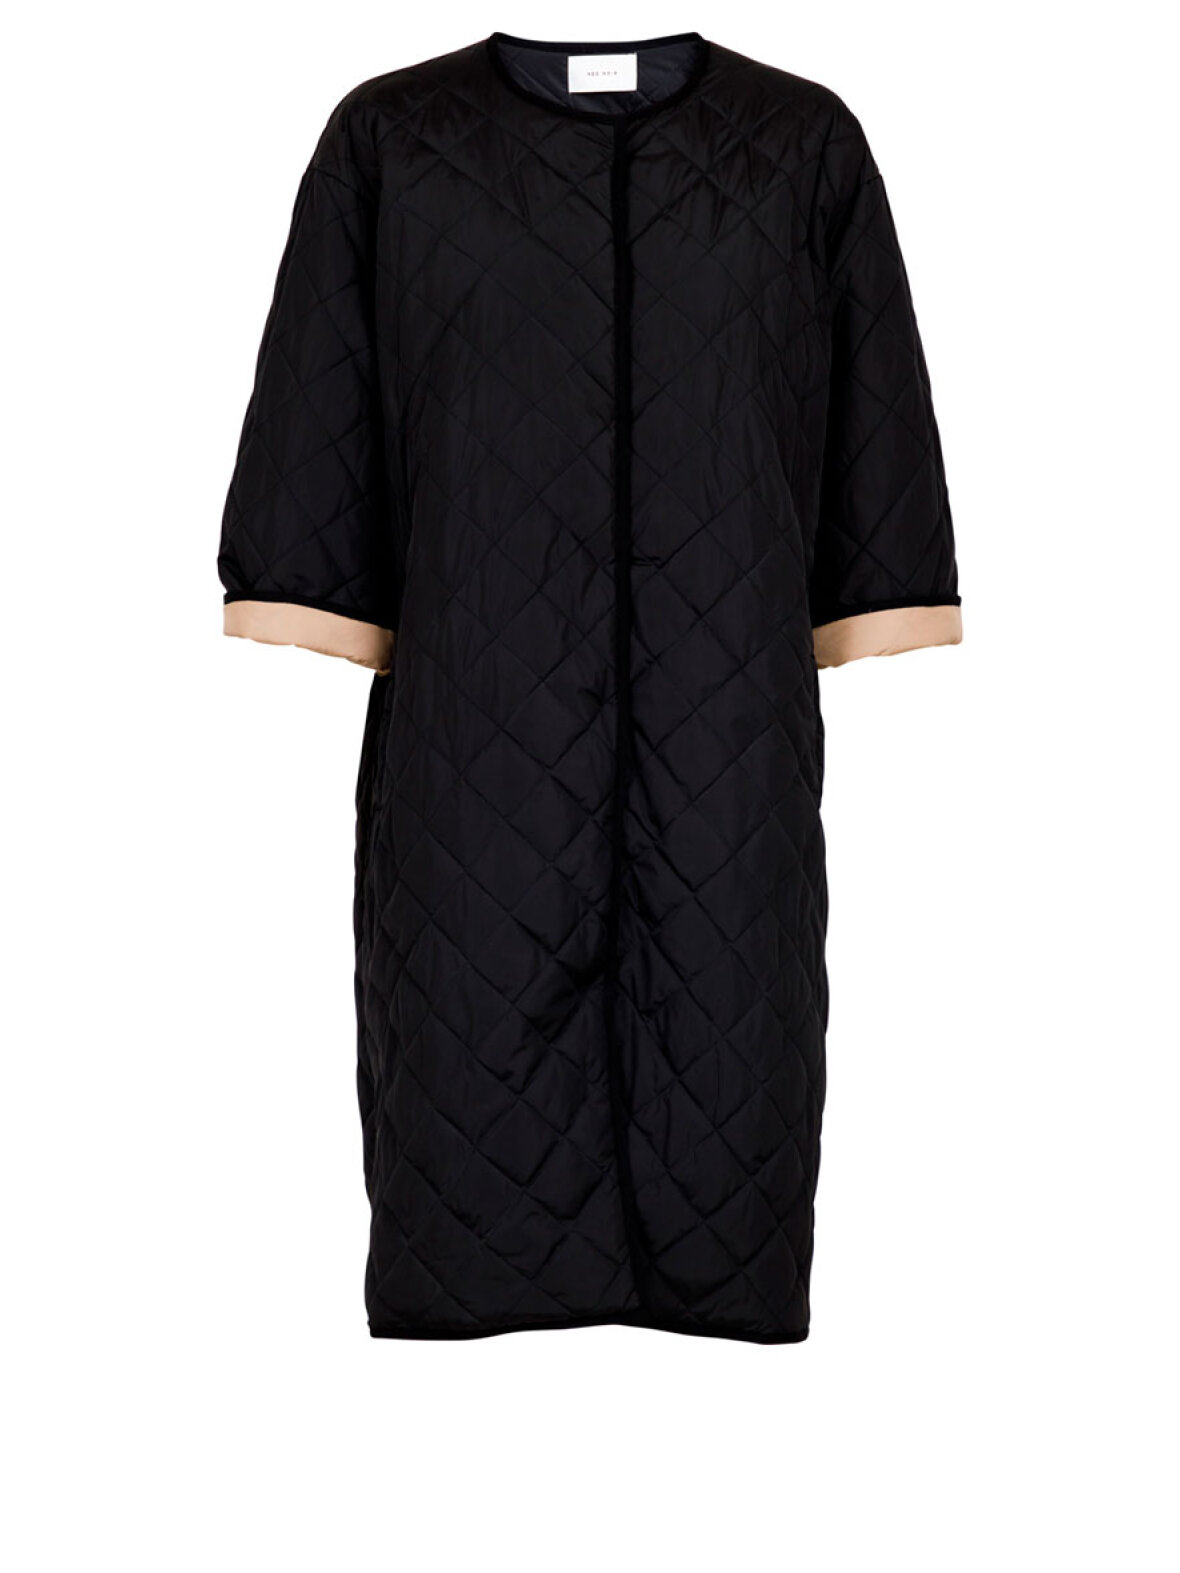 - Neo Noir Jullia Quilt Coat Black - Shop sort quiltet jakke